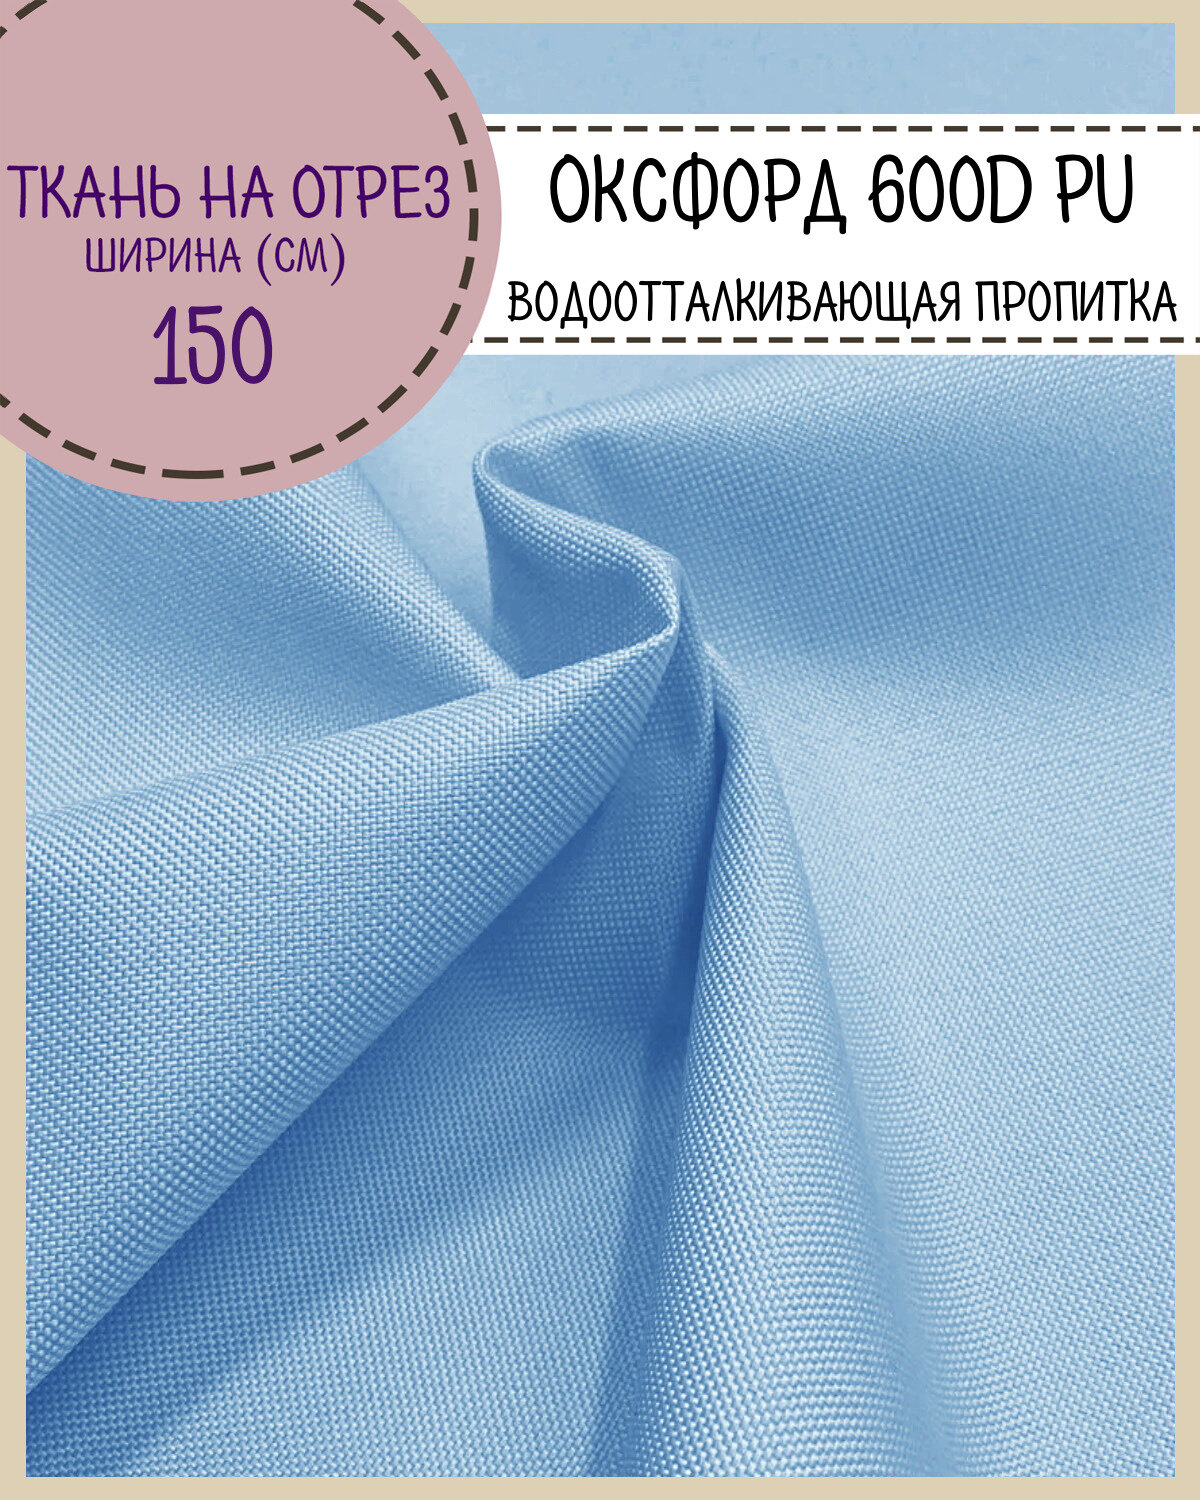 Ткань Оксфорд Oxford 600D PU 1000, пропитка водоотталкивающая, цв. голубой, ш-150 см, на отрез, цена за пог. метр